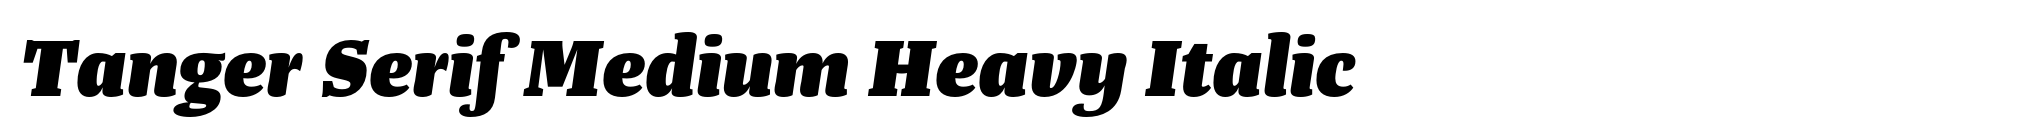 Tanger Serif Medium Heavy Italic image